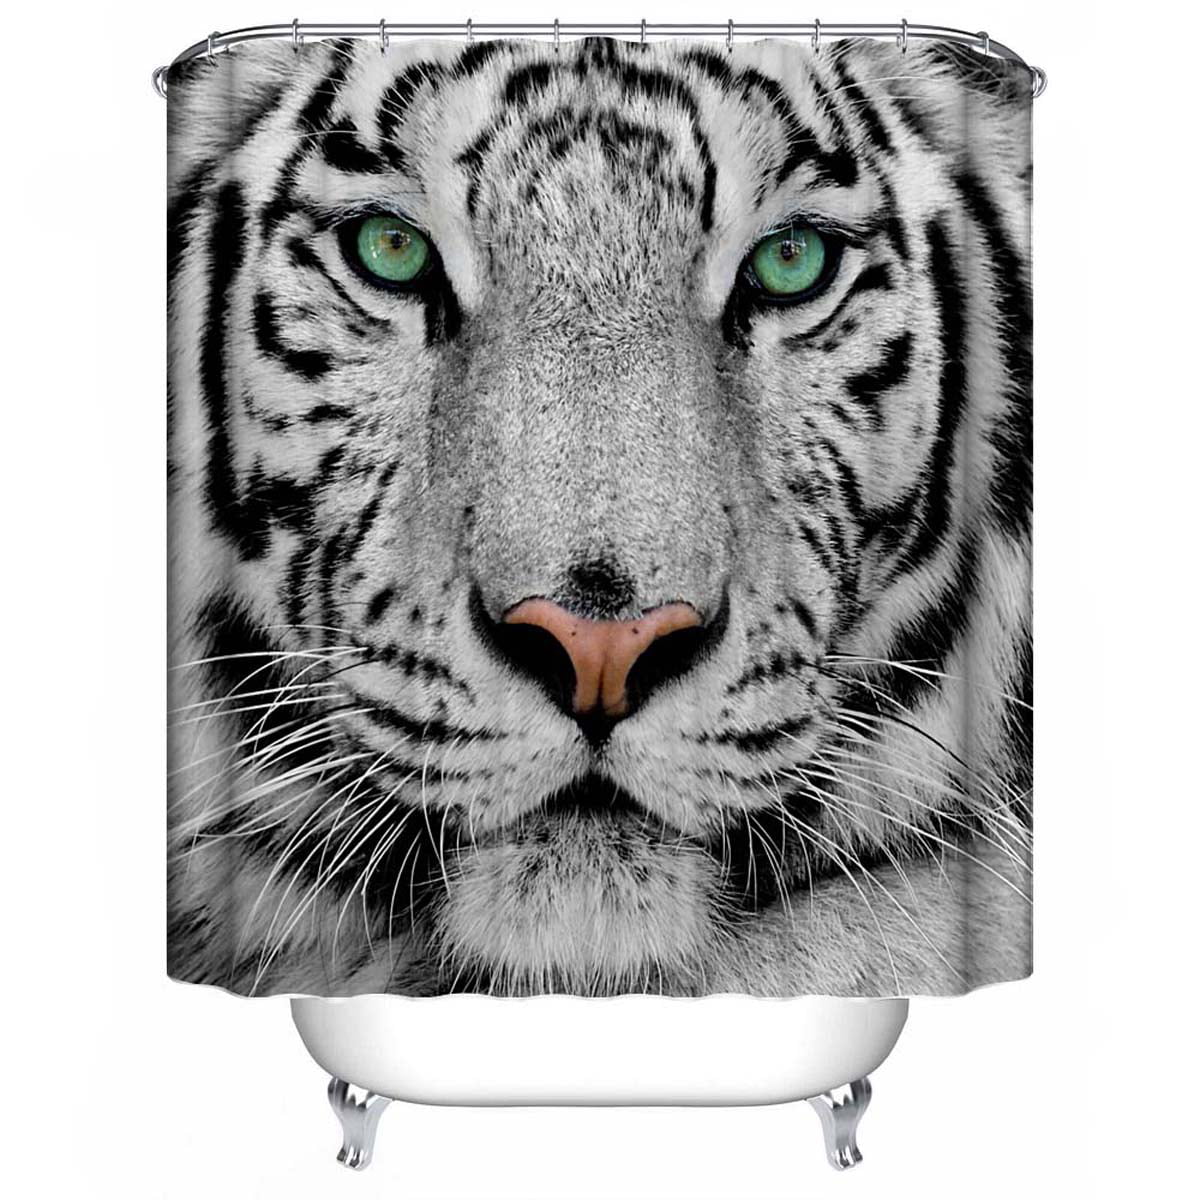 White Siberian Tiger Face Shower Curtain Bathroom Liner Mat Waterproof Fabric 